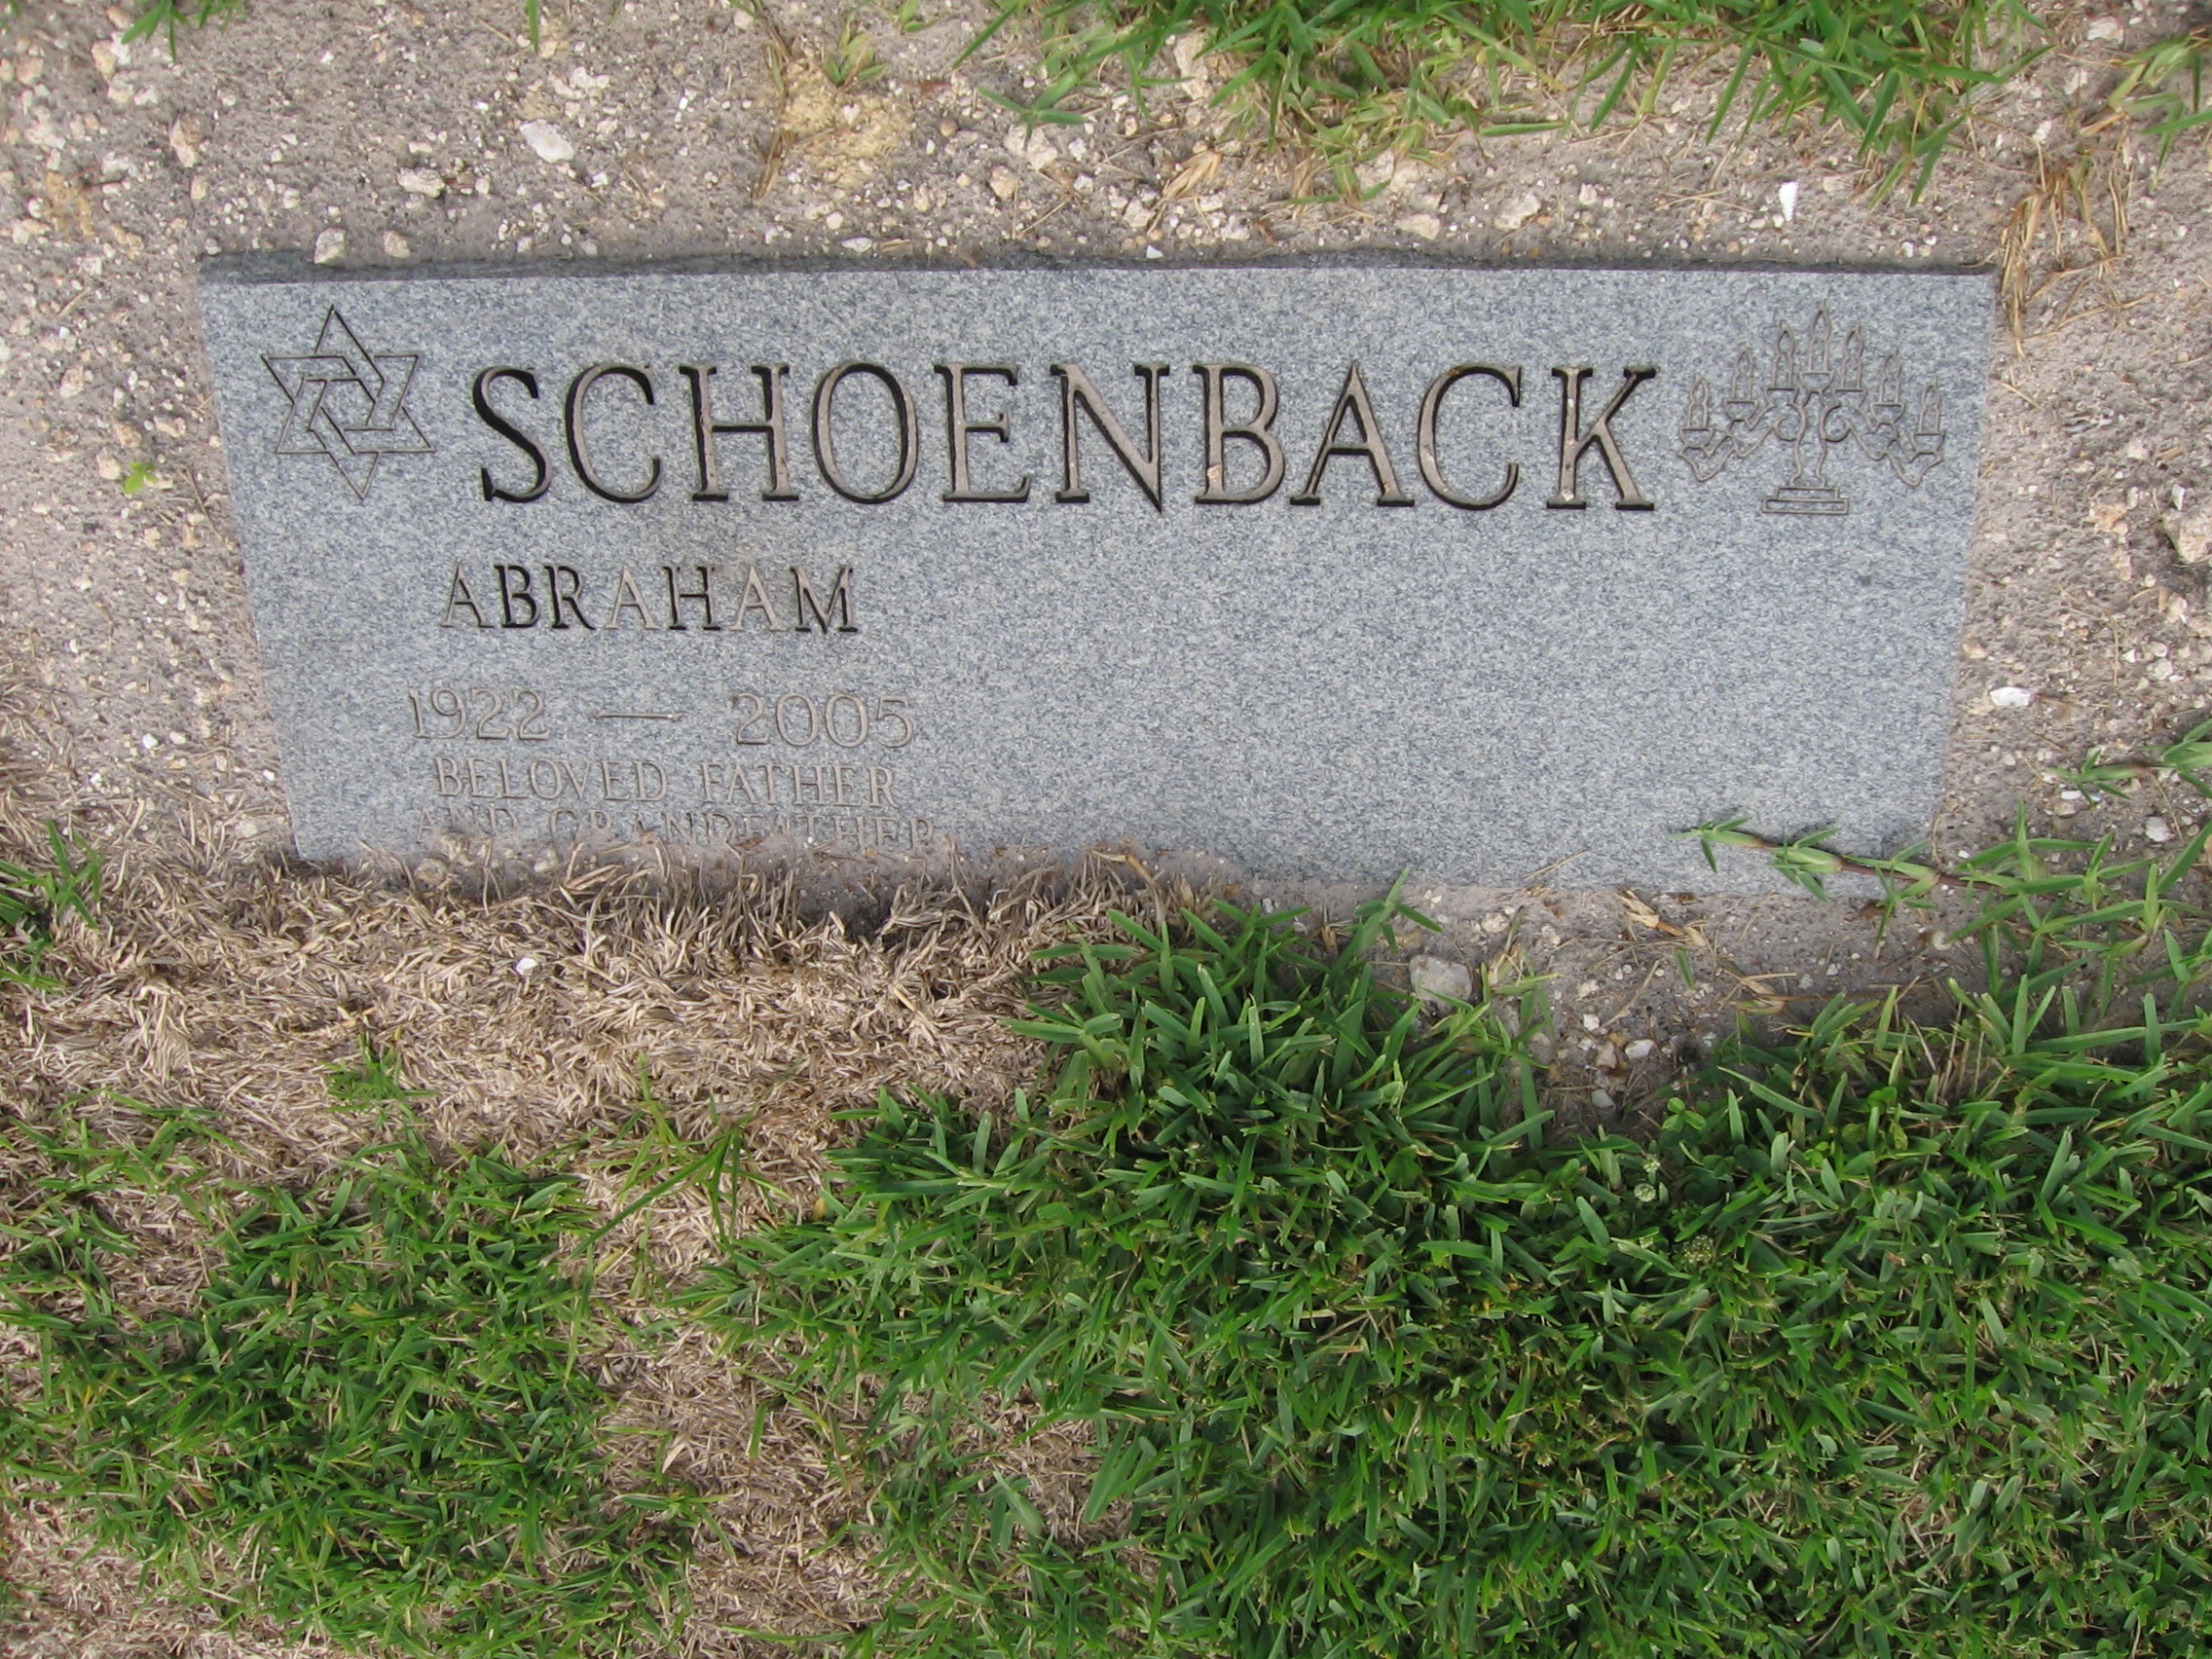 Abraham Schoenback